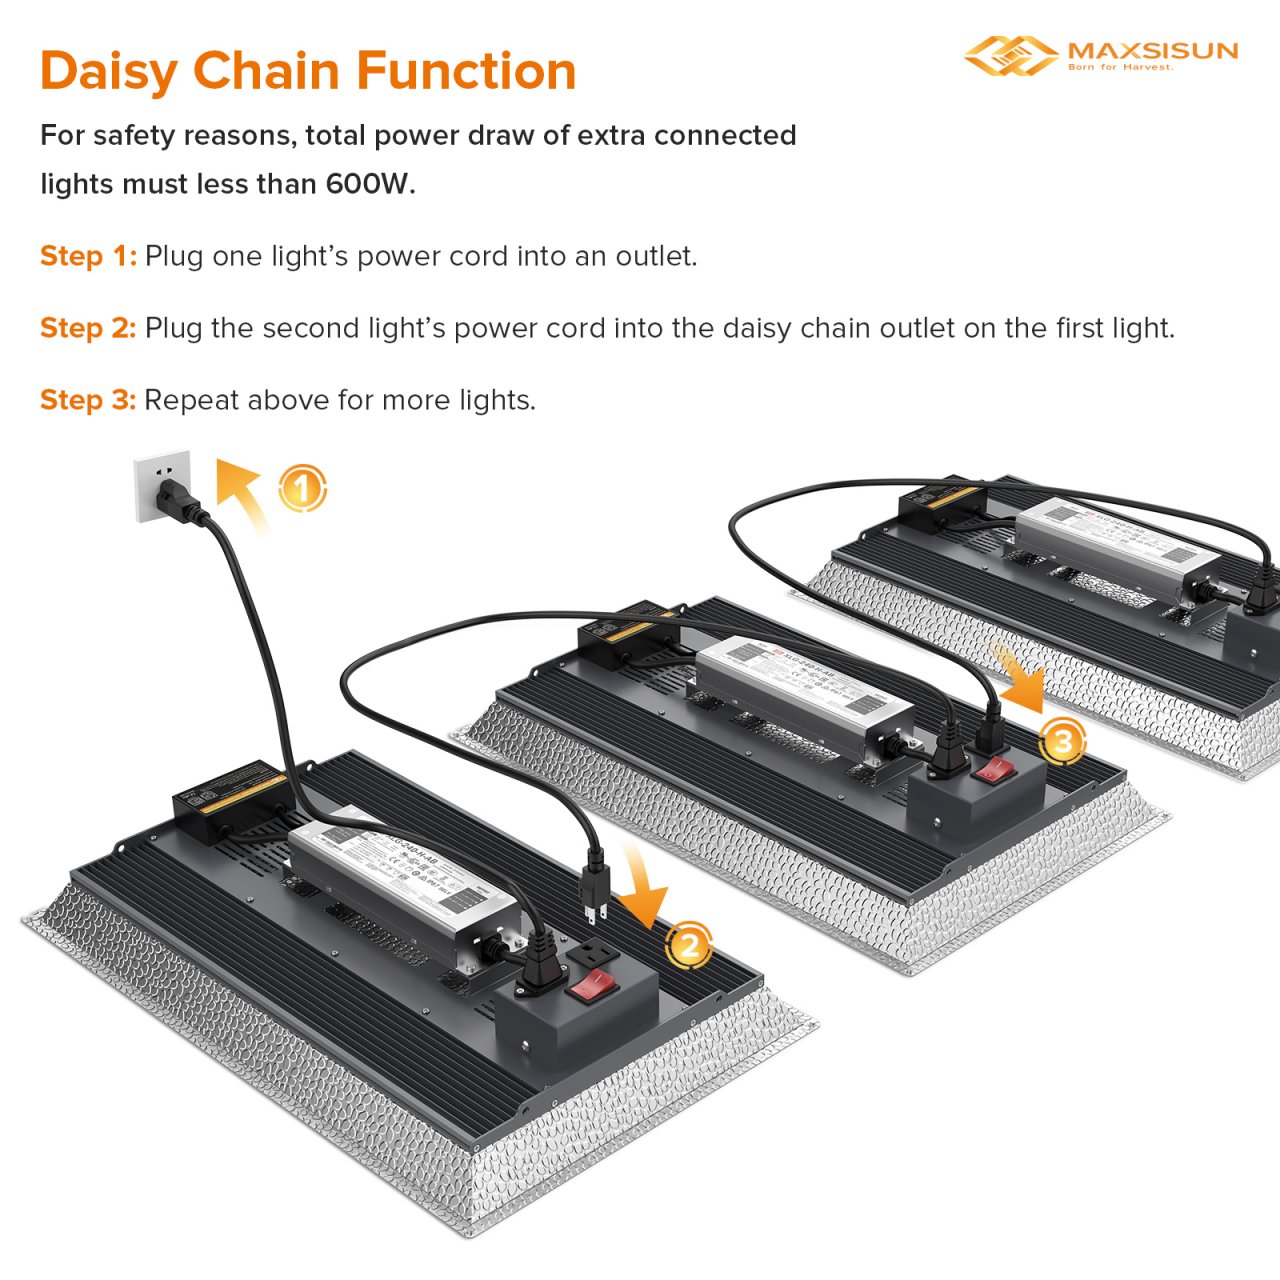 MF2000-Daisy Chain Function.jpg